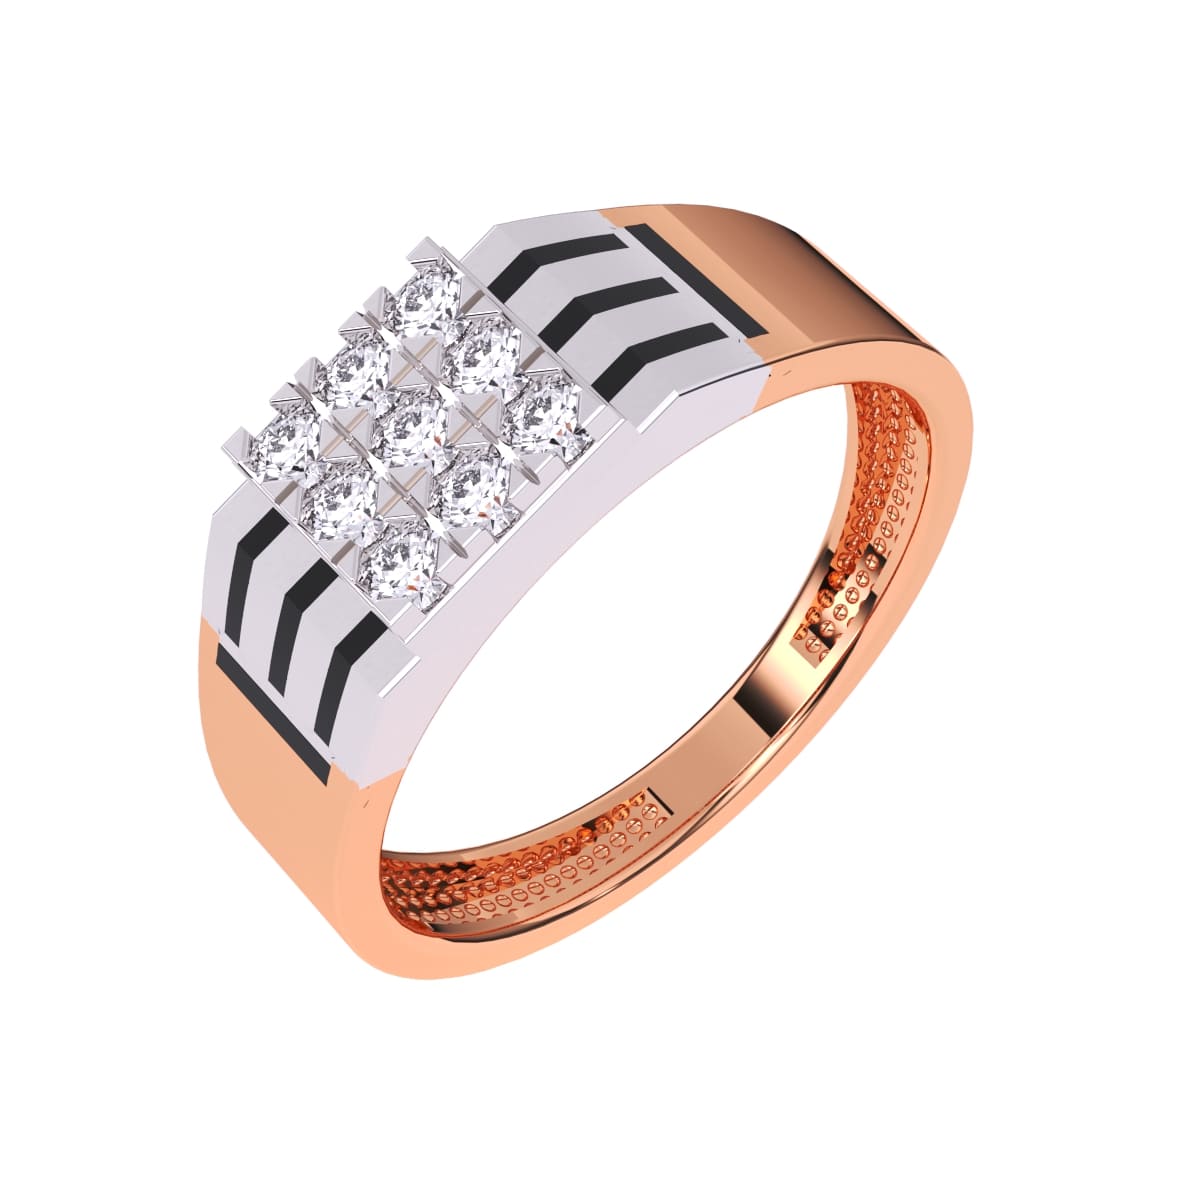 Buy Men's Diamond Ring in 18KT Yellow Gold Online | ORRA